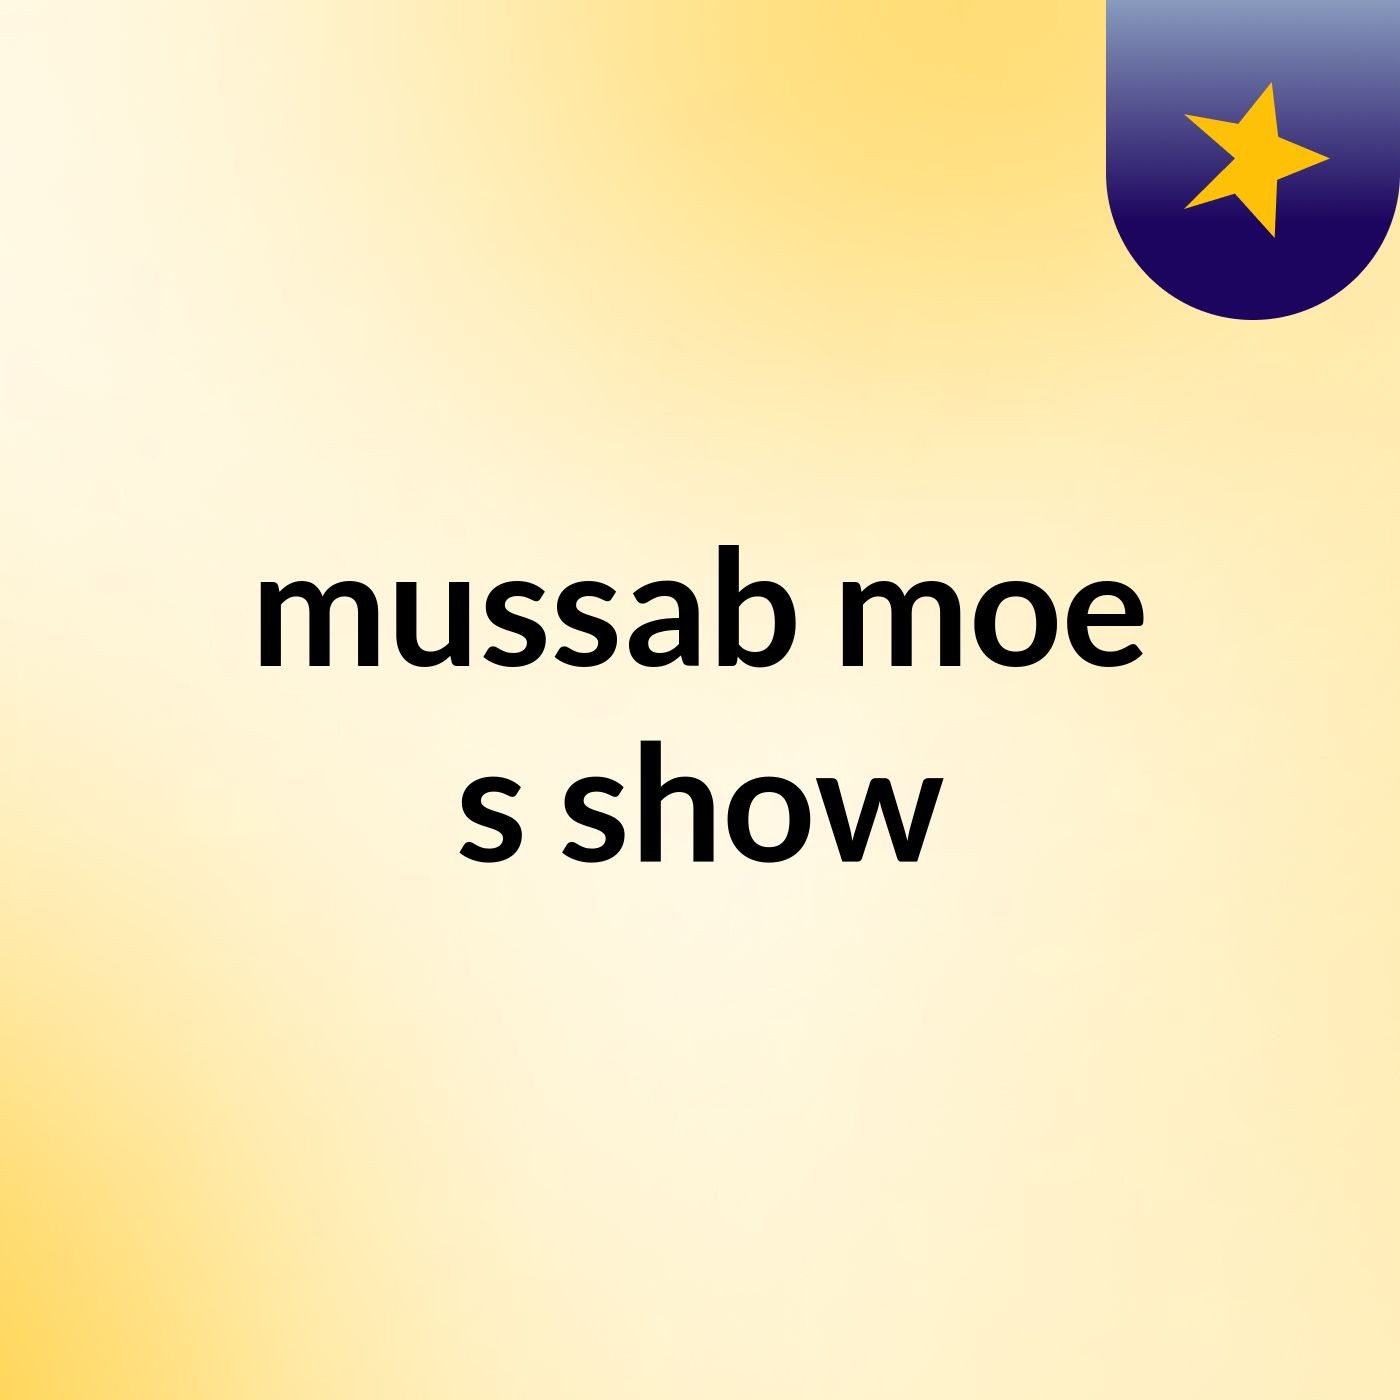 mussab moe's show